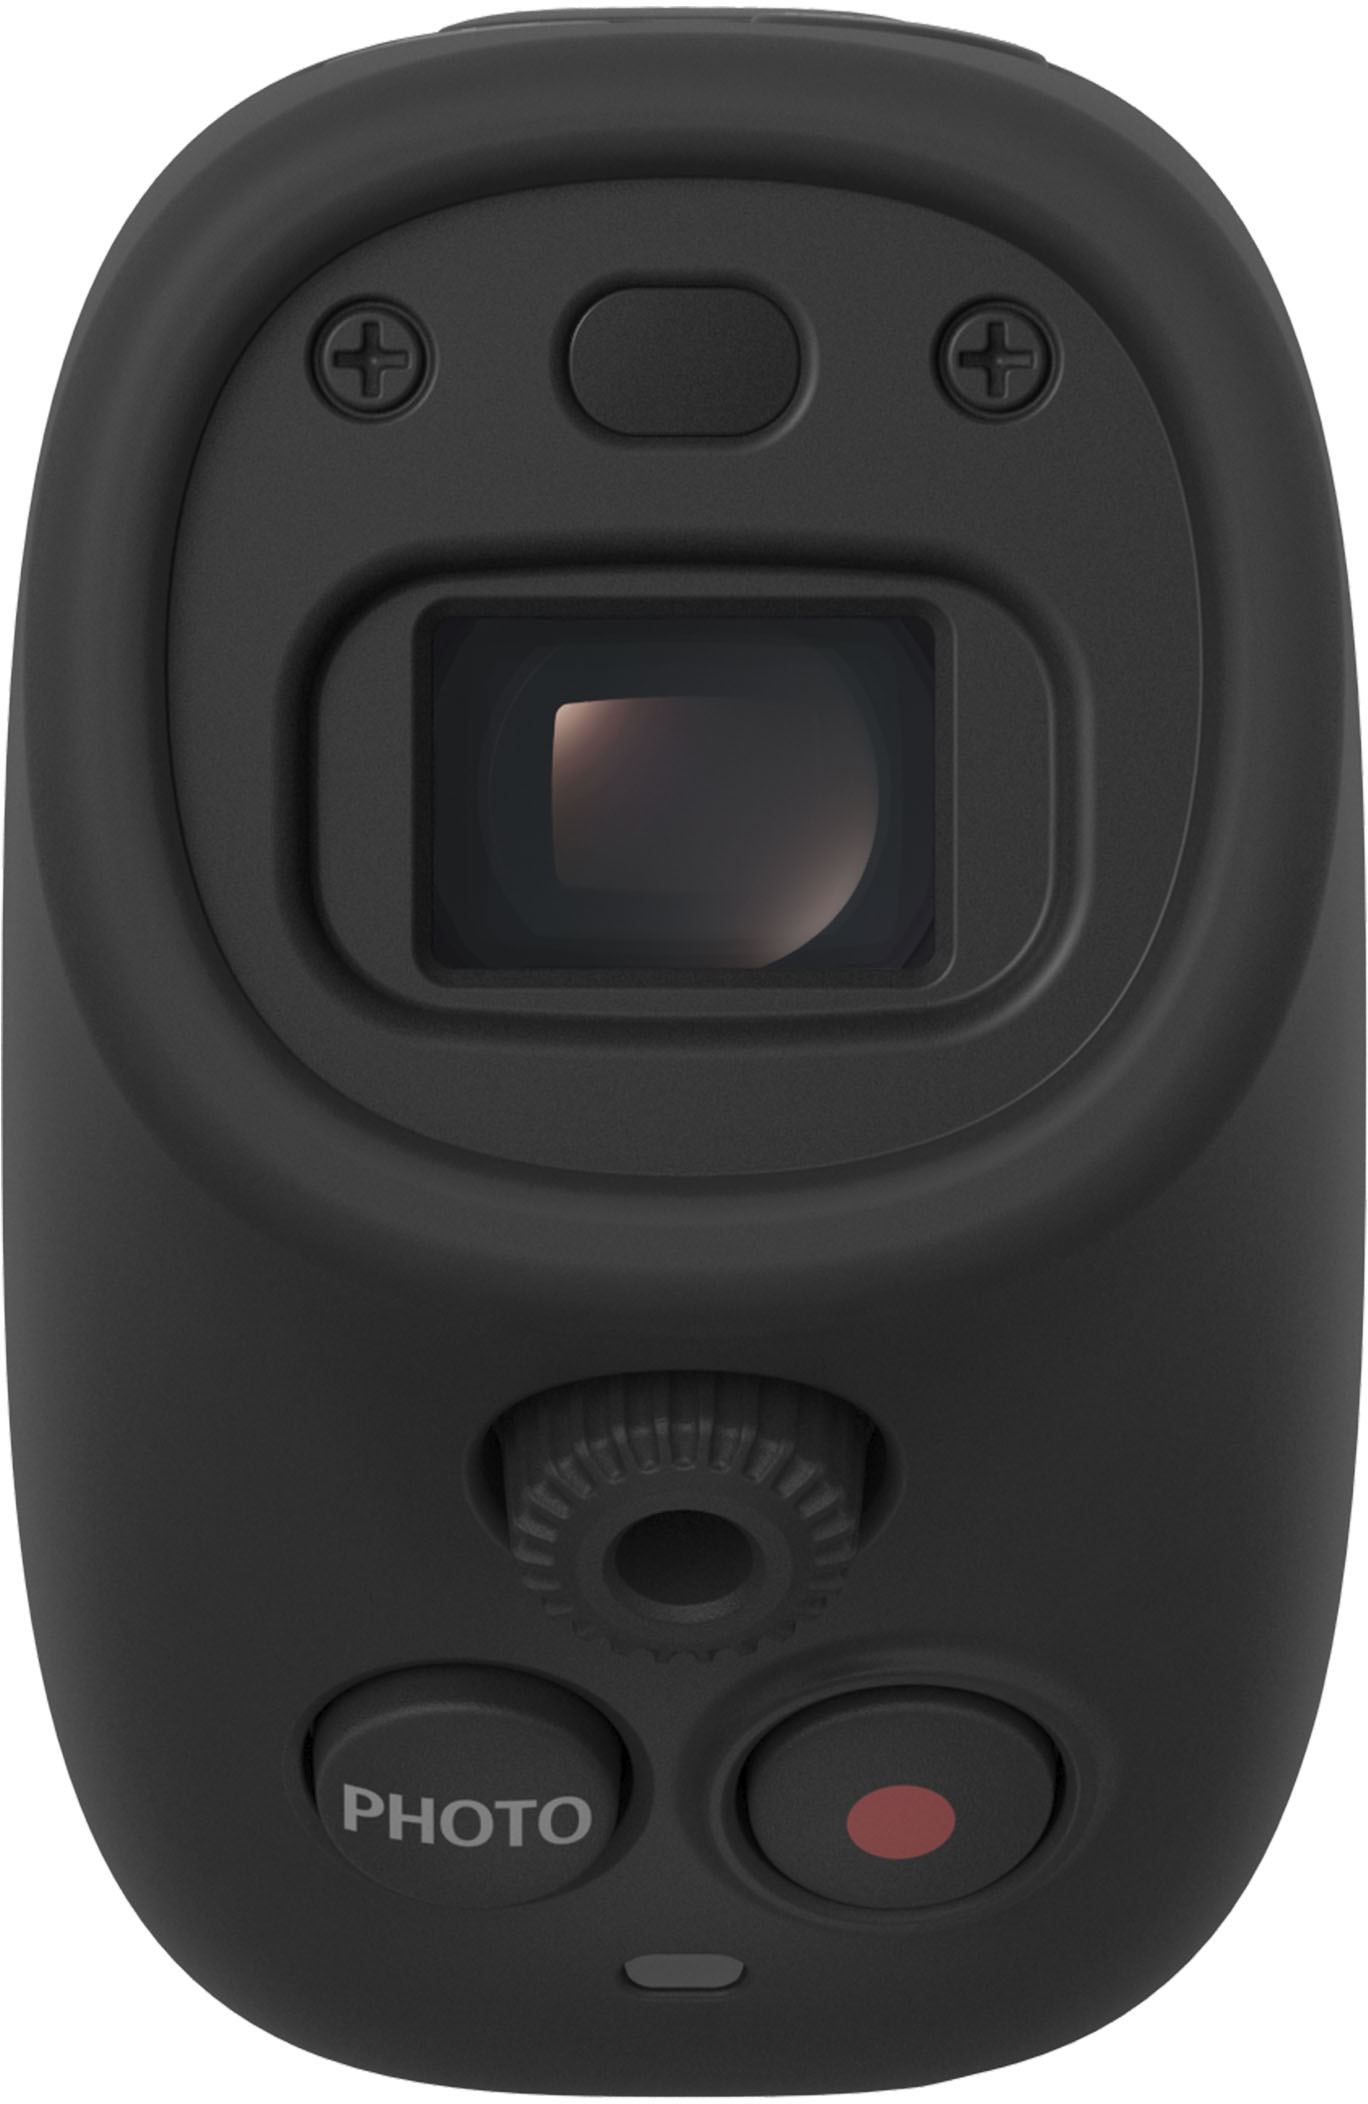 Back View: Canon - PIXMA TS302 Wireless Inkjet Printer - Black